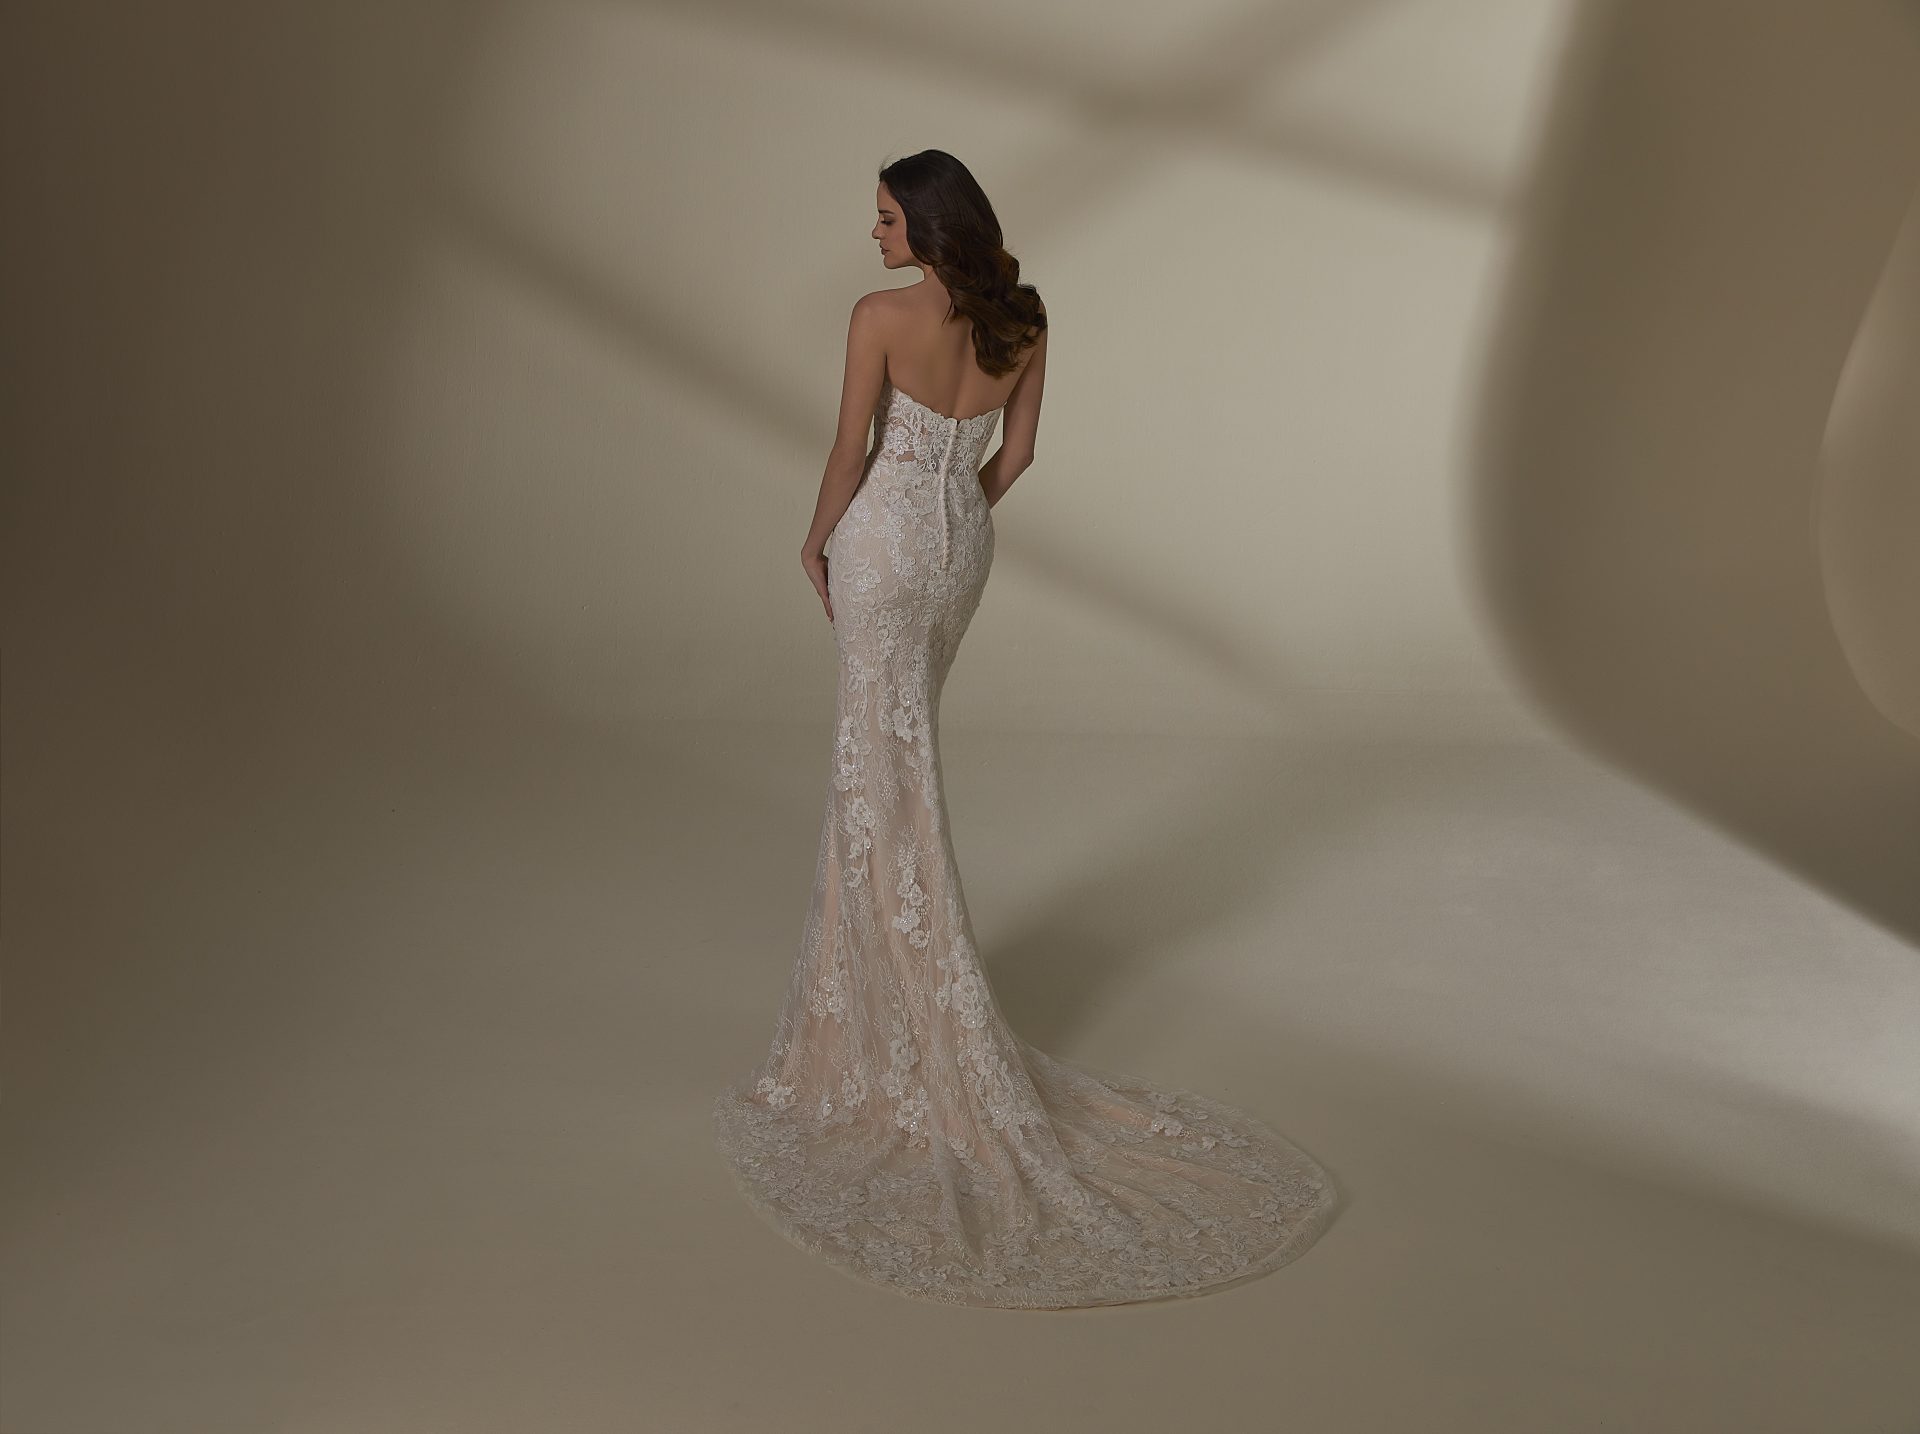 Fishtail/mermaid lace wedding dress